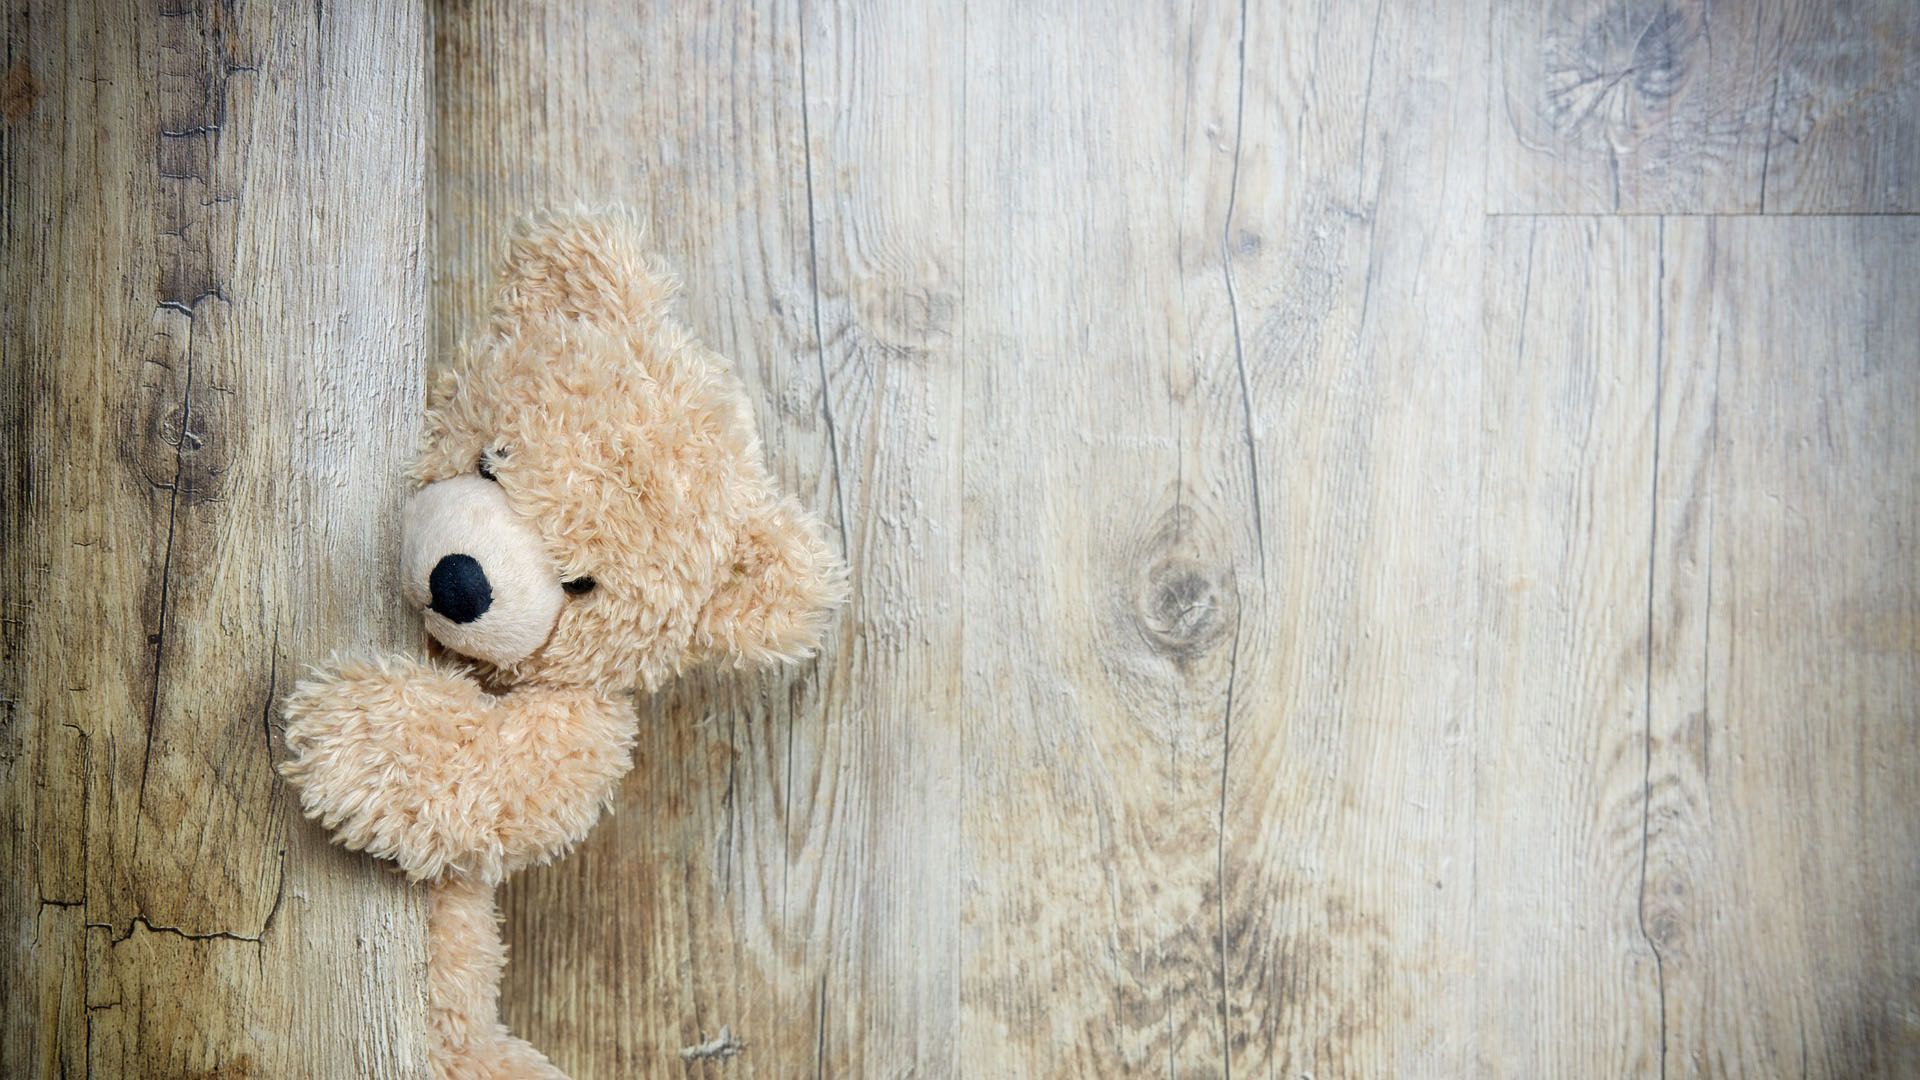 A teddy bear with a sad look on its face, sitting against a wooden wall. - Teddy bear